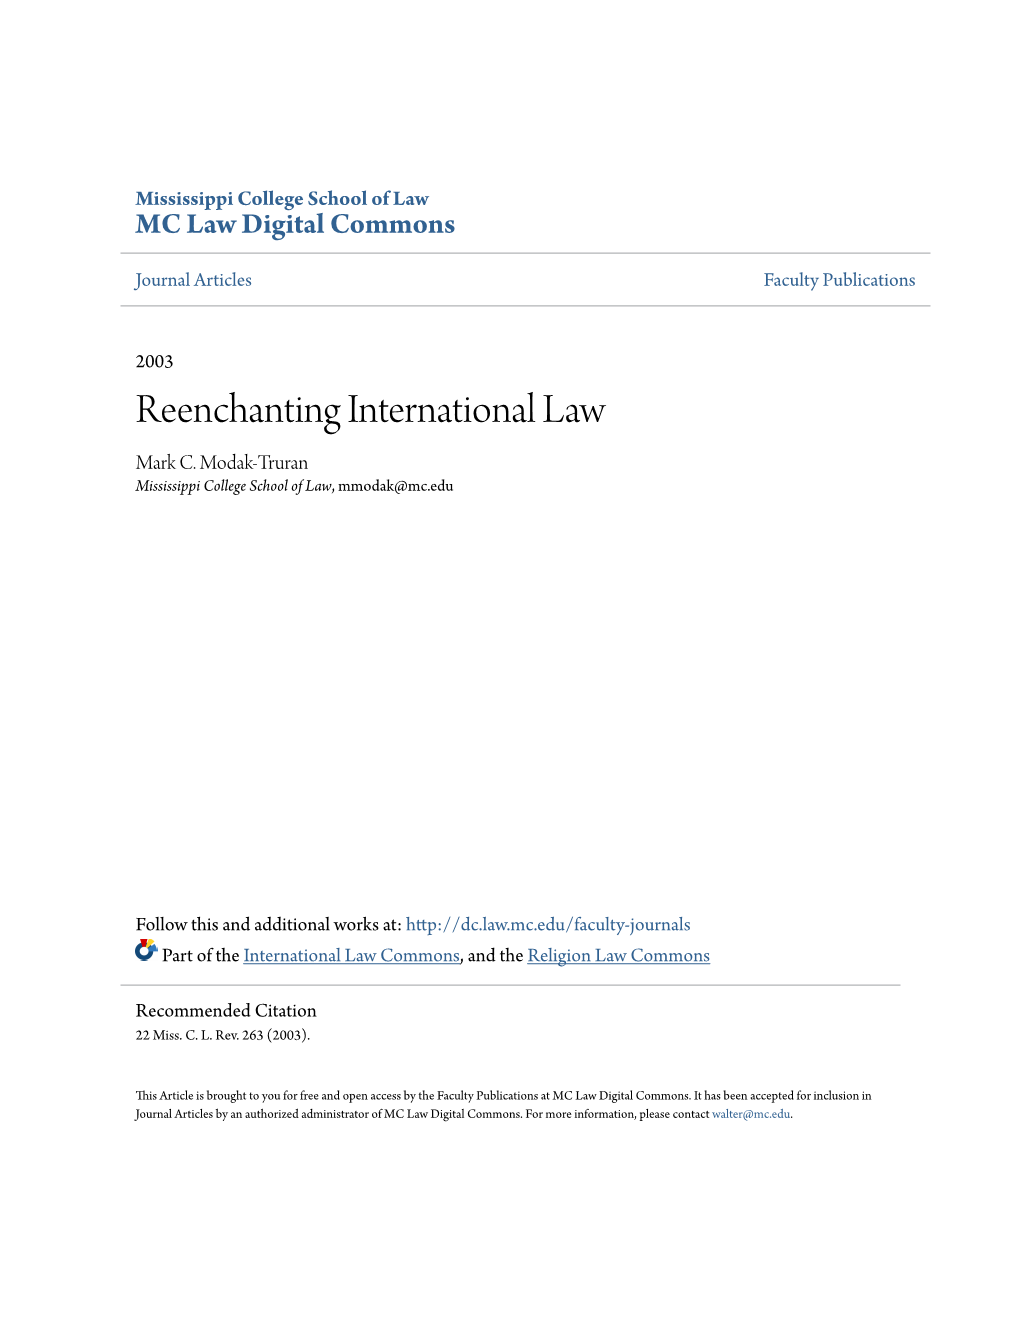 Reenchanting International Law Mark C